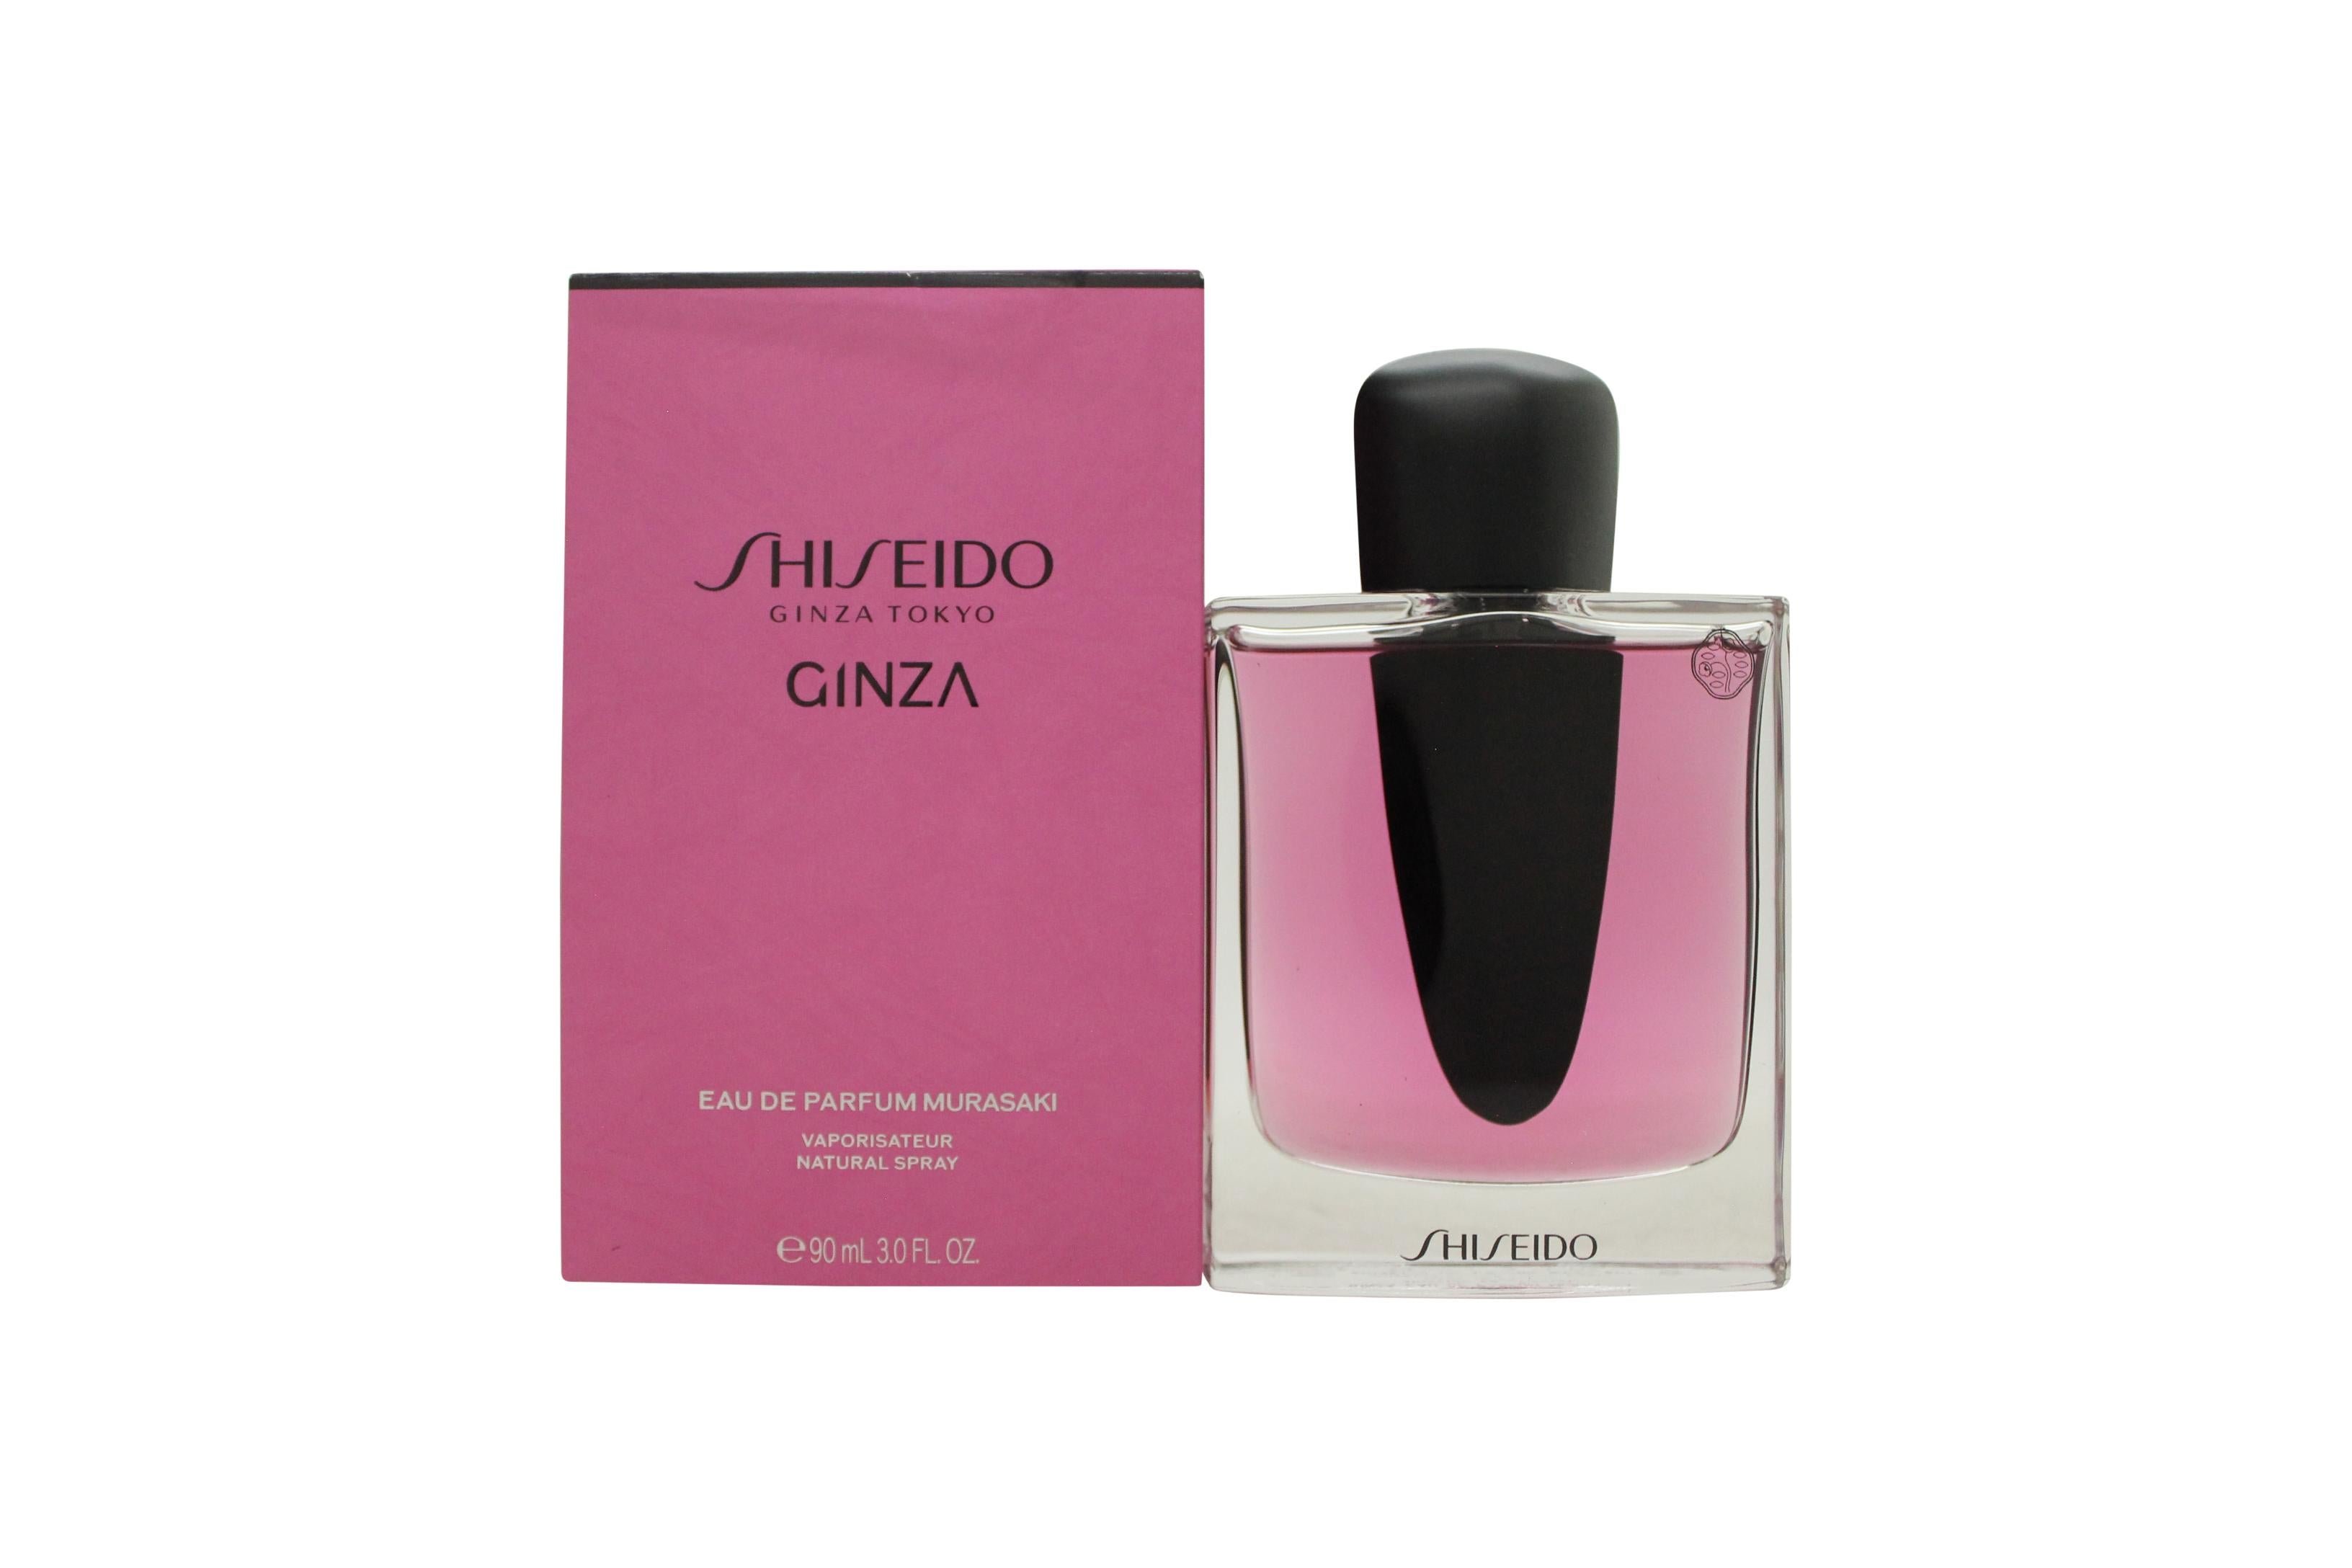 View Shiseido Ginza Murasaki Eau de Parfum 90ml Spray information